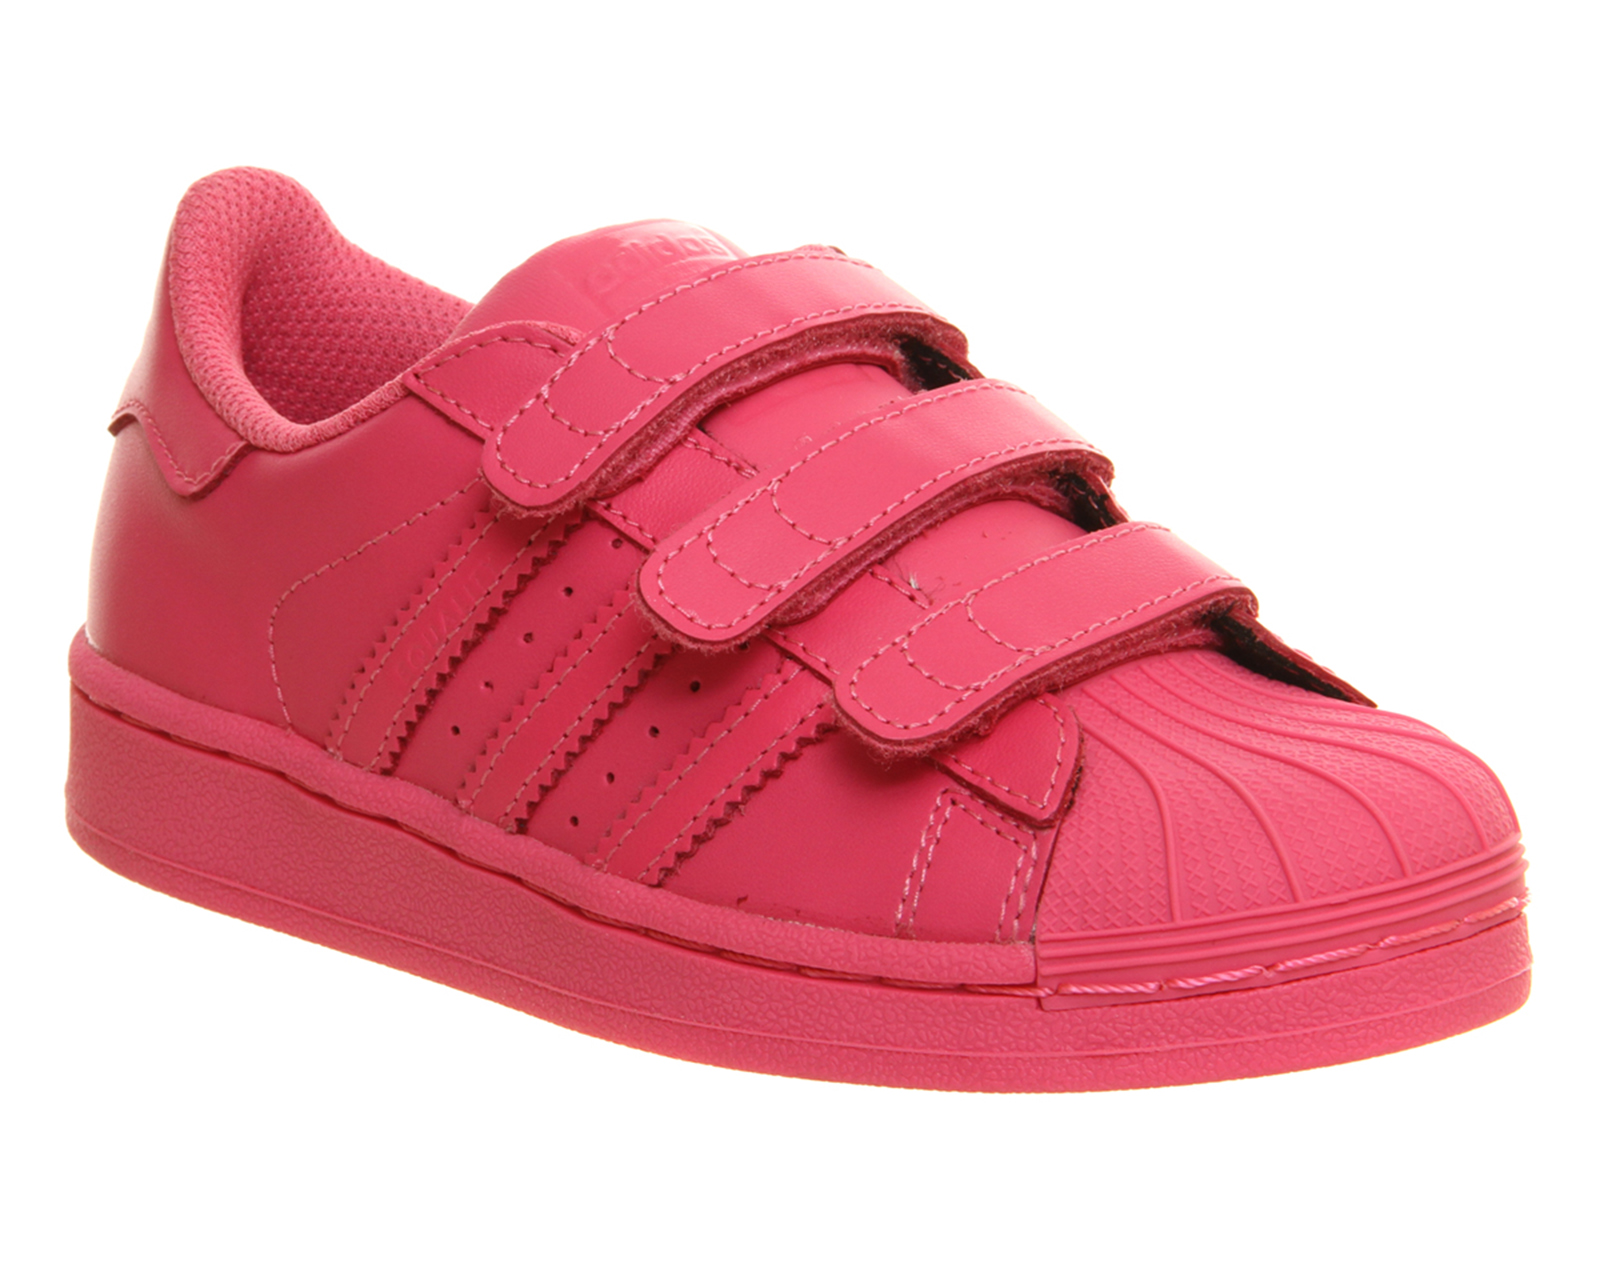 adidas superstar kids pink